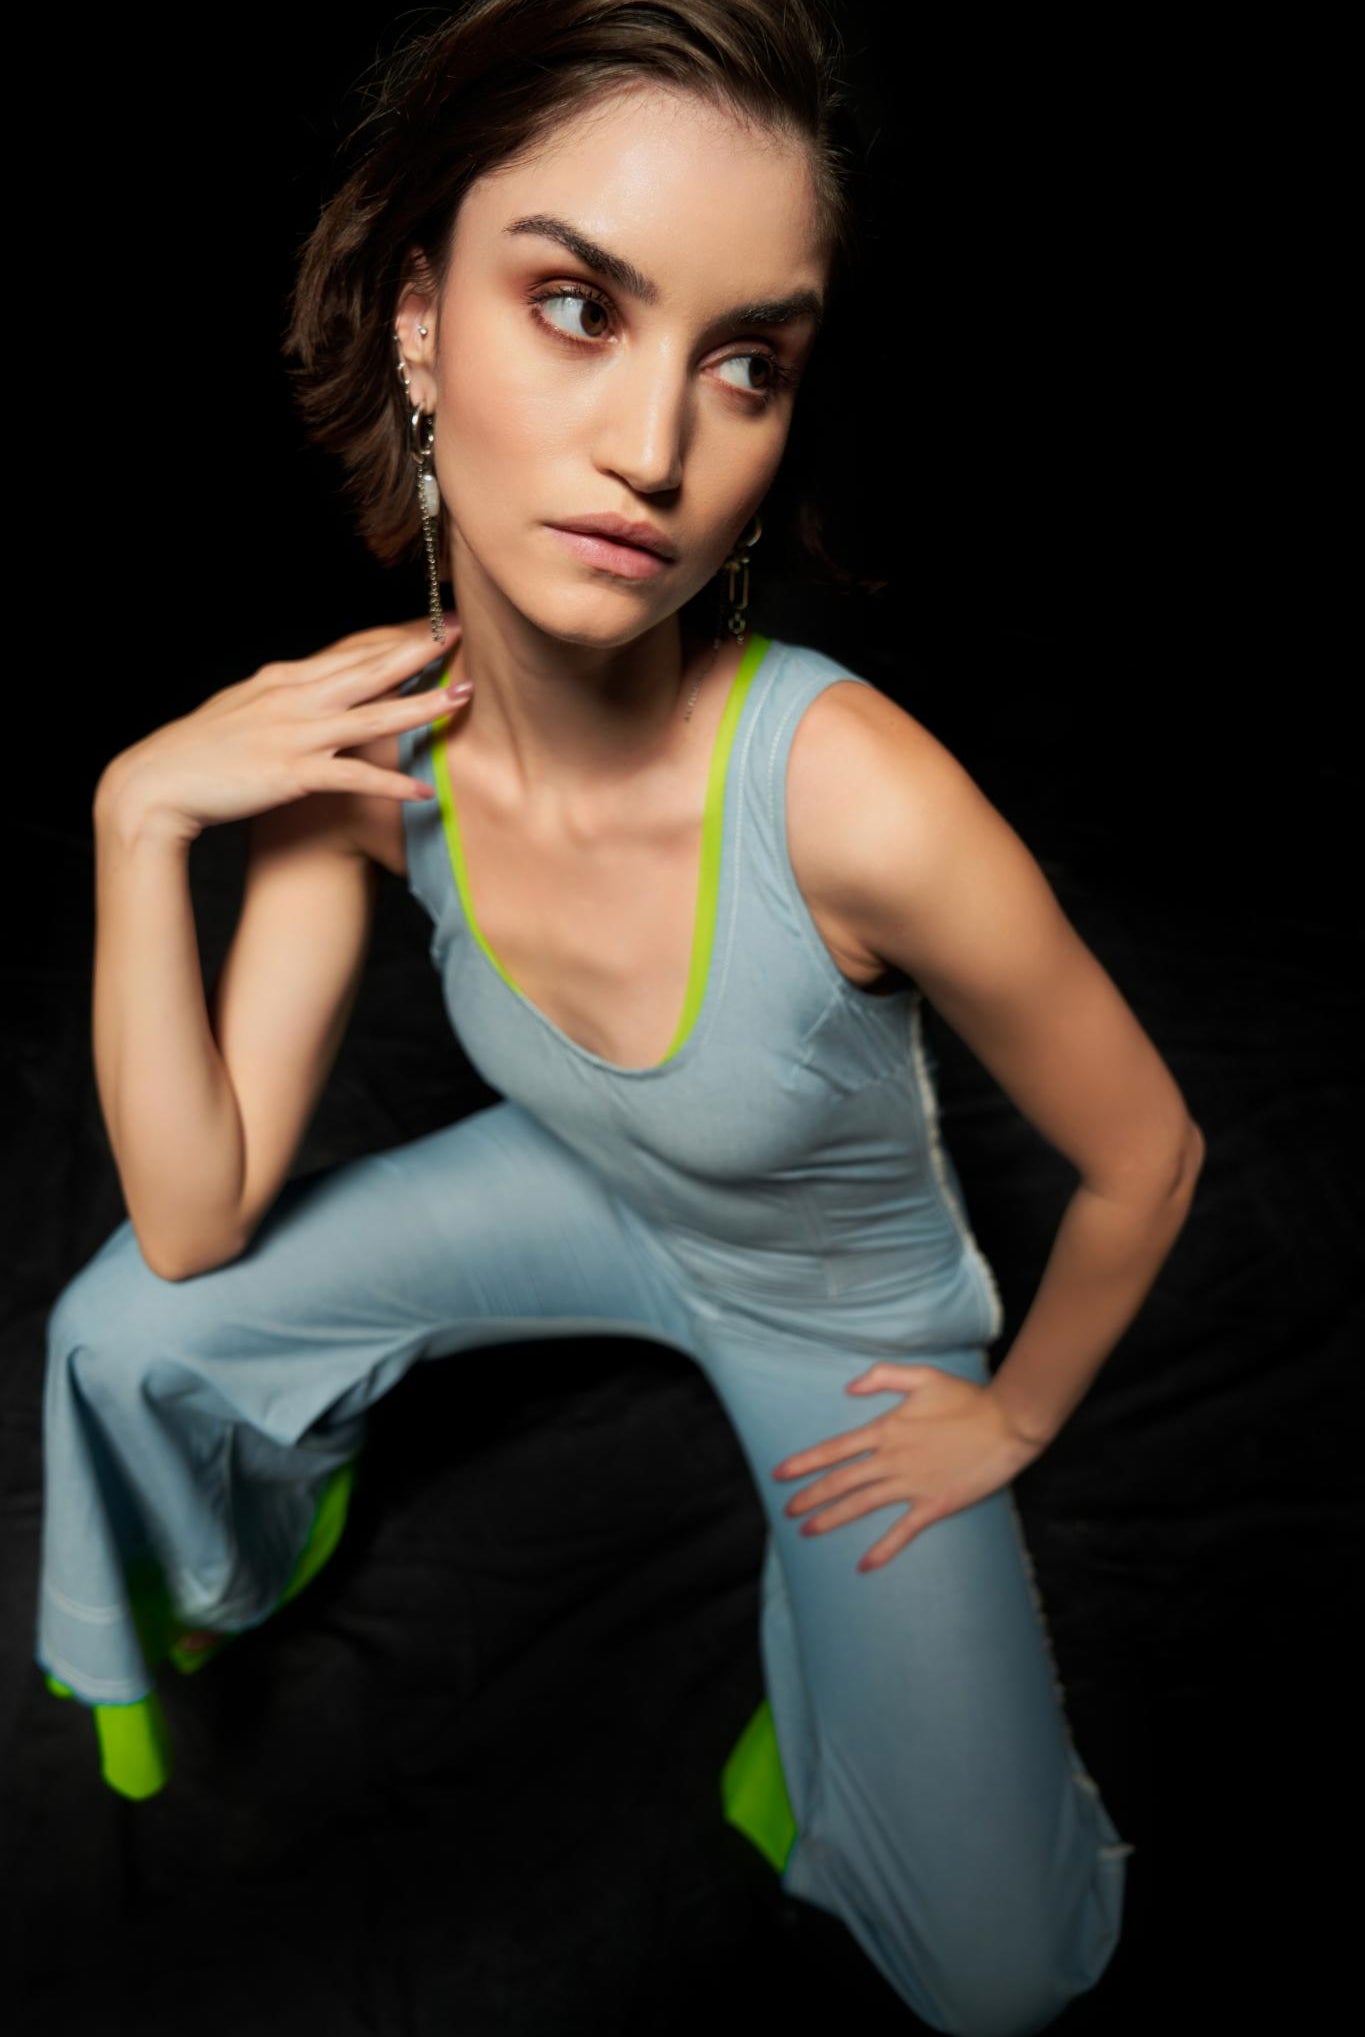 Jumpsuit with Neon Green Accent - CiceroniJumpsuitPriyanca Khanna